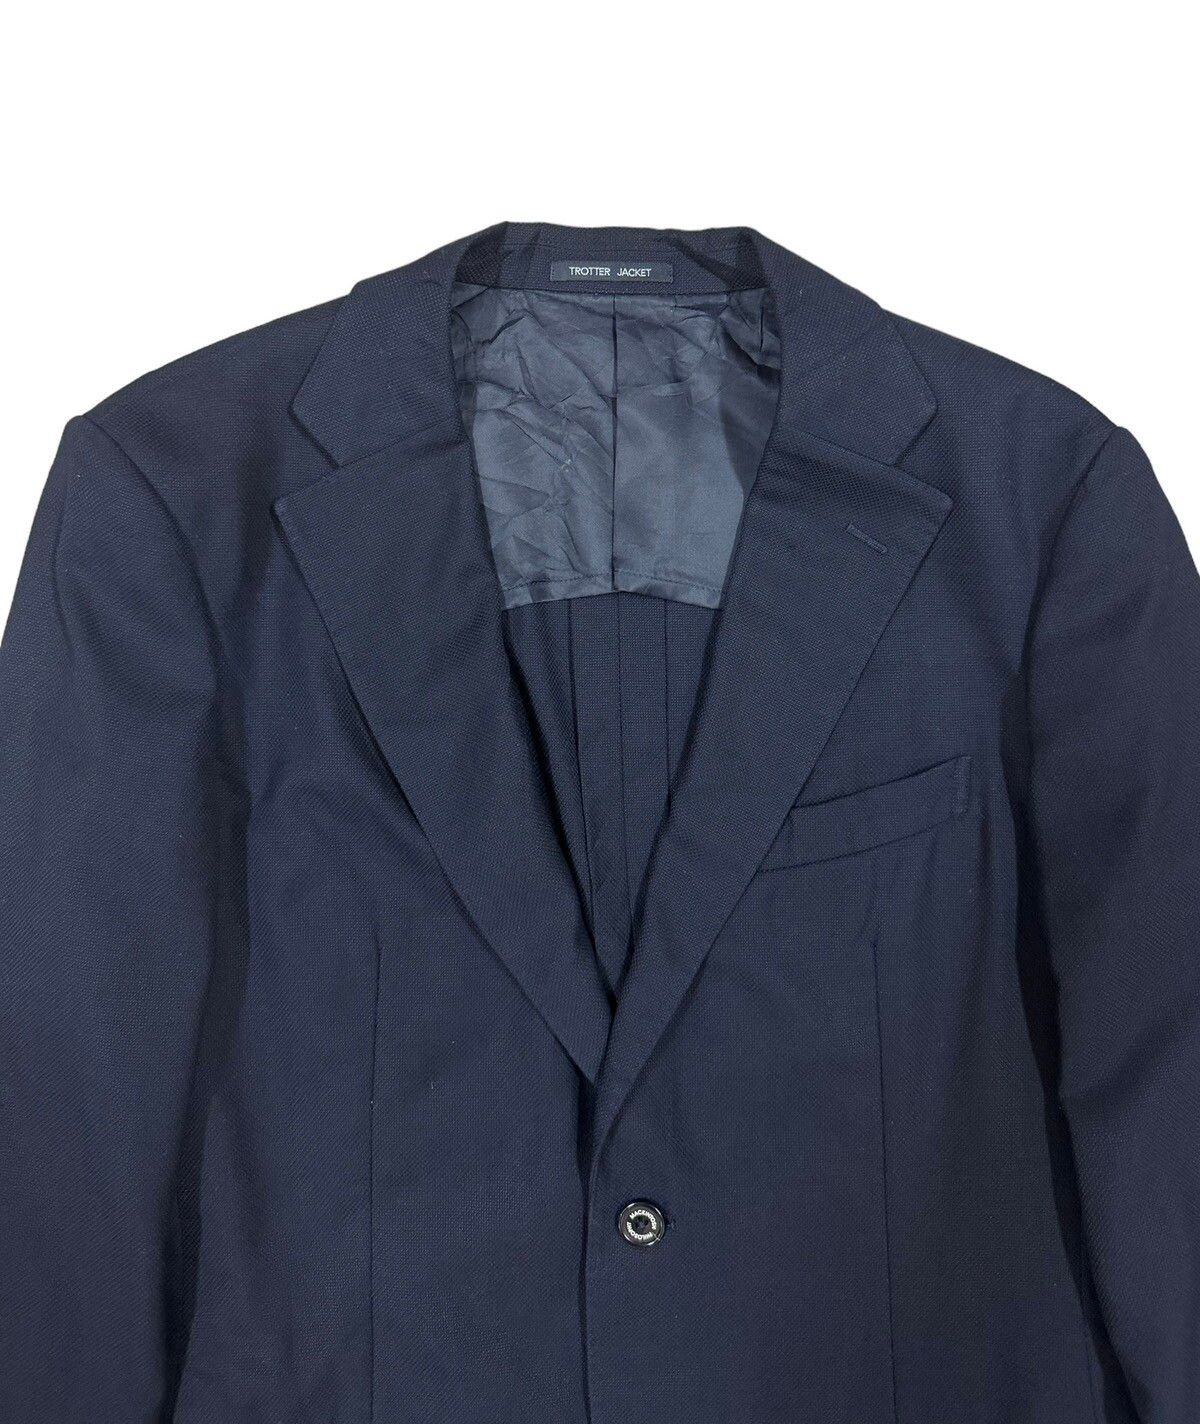 Mackintosh Philosophy Blazer Jacket Suit - 3